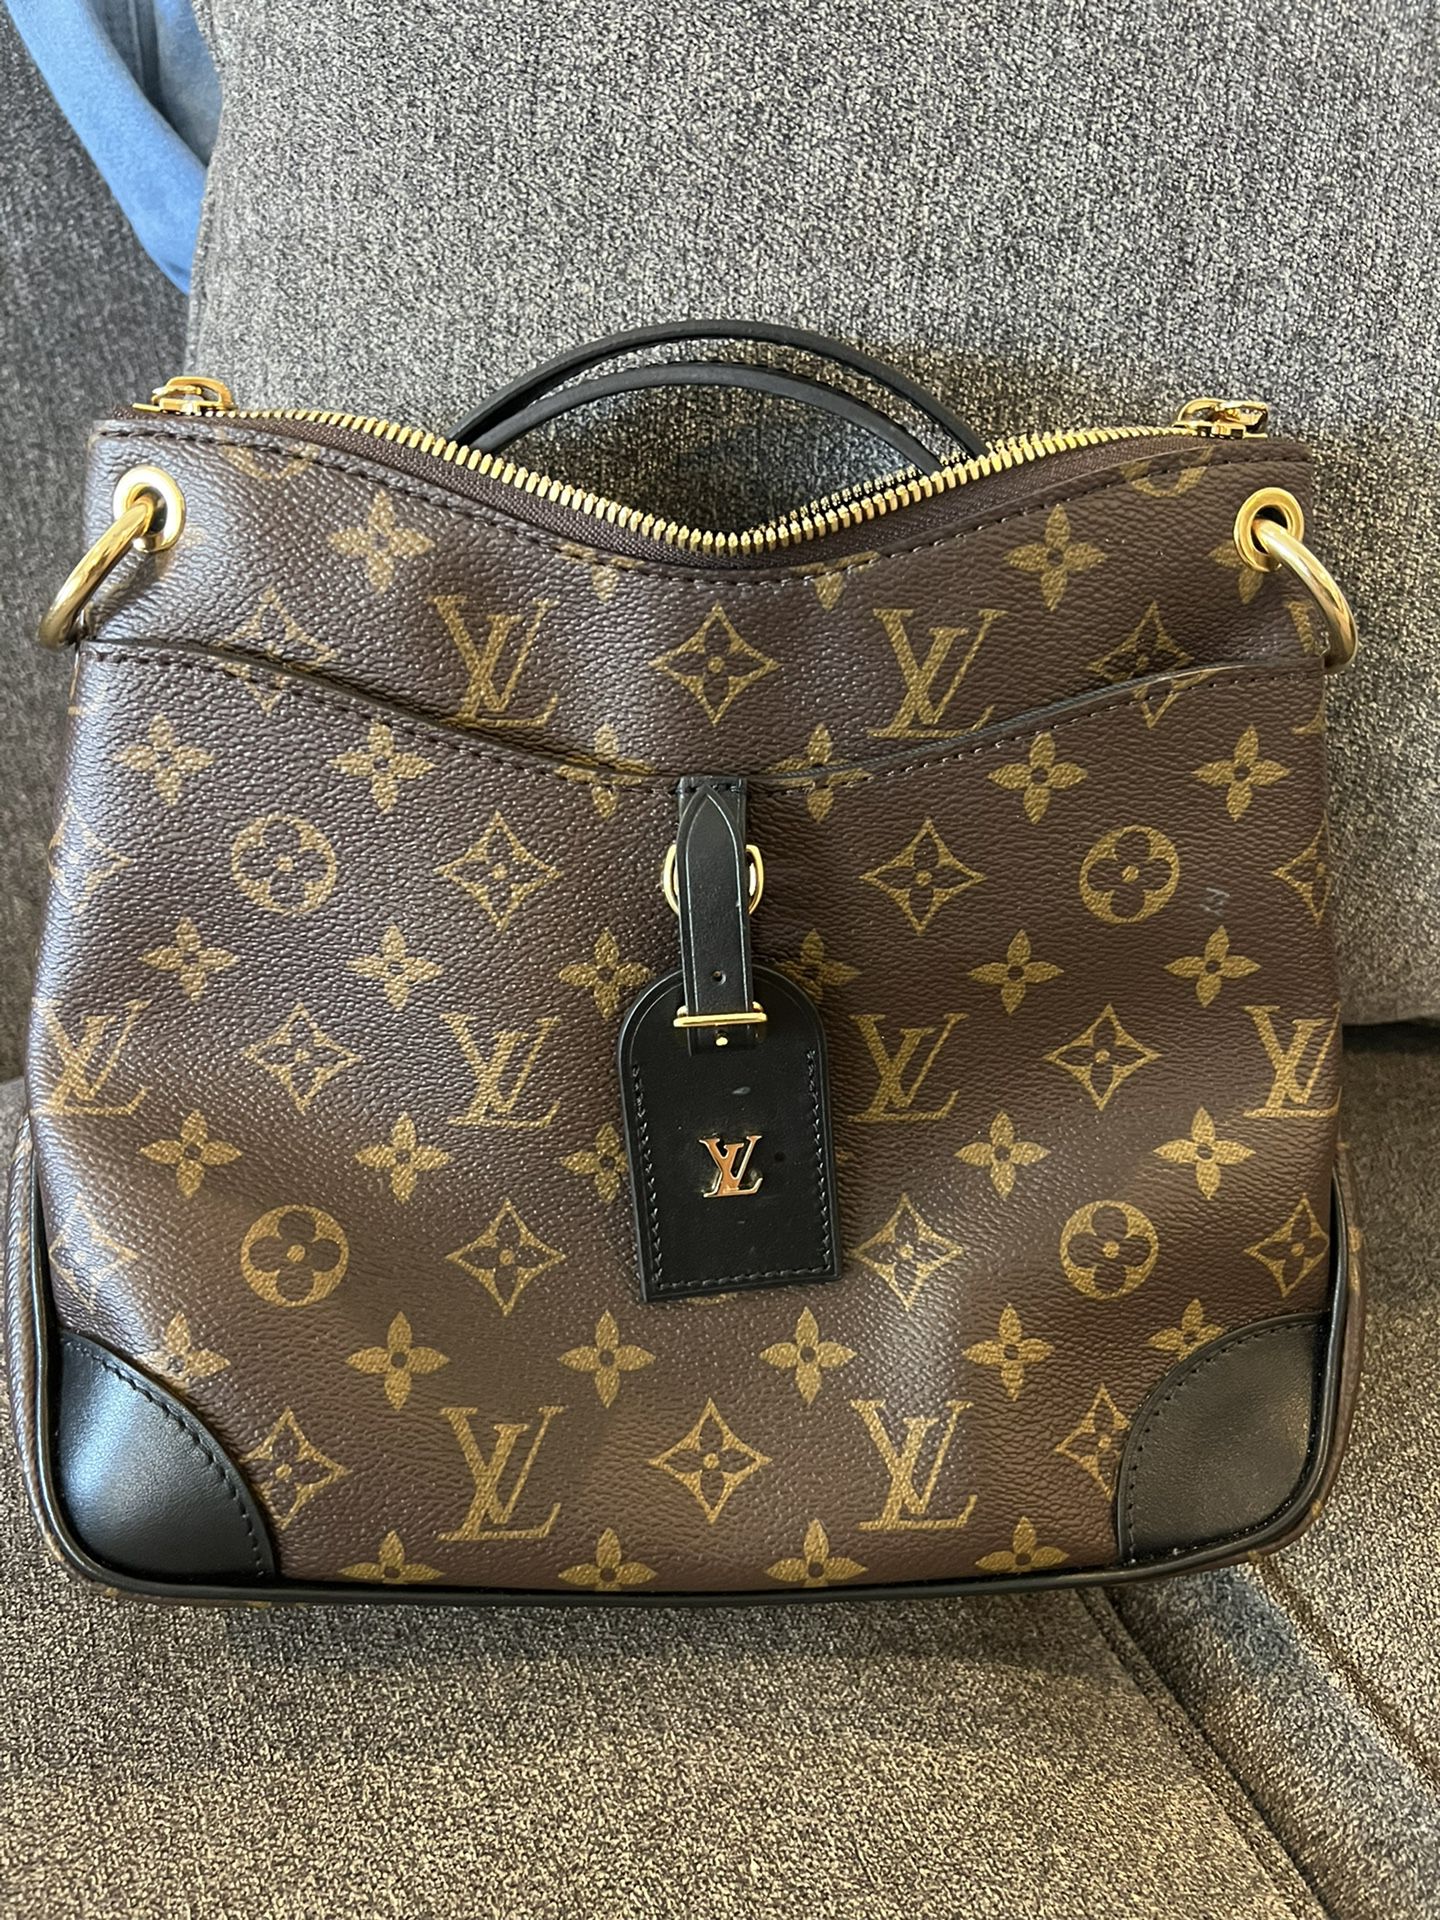 Used Louis Vuitton Odeon Pm Handbag for Sale in Kearny, NJ - OfferUp